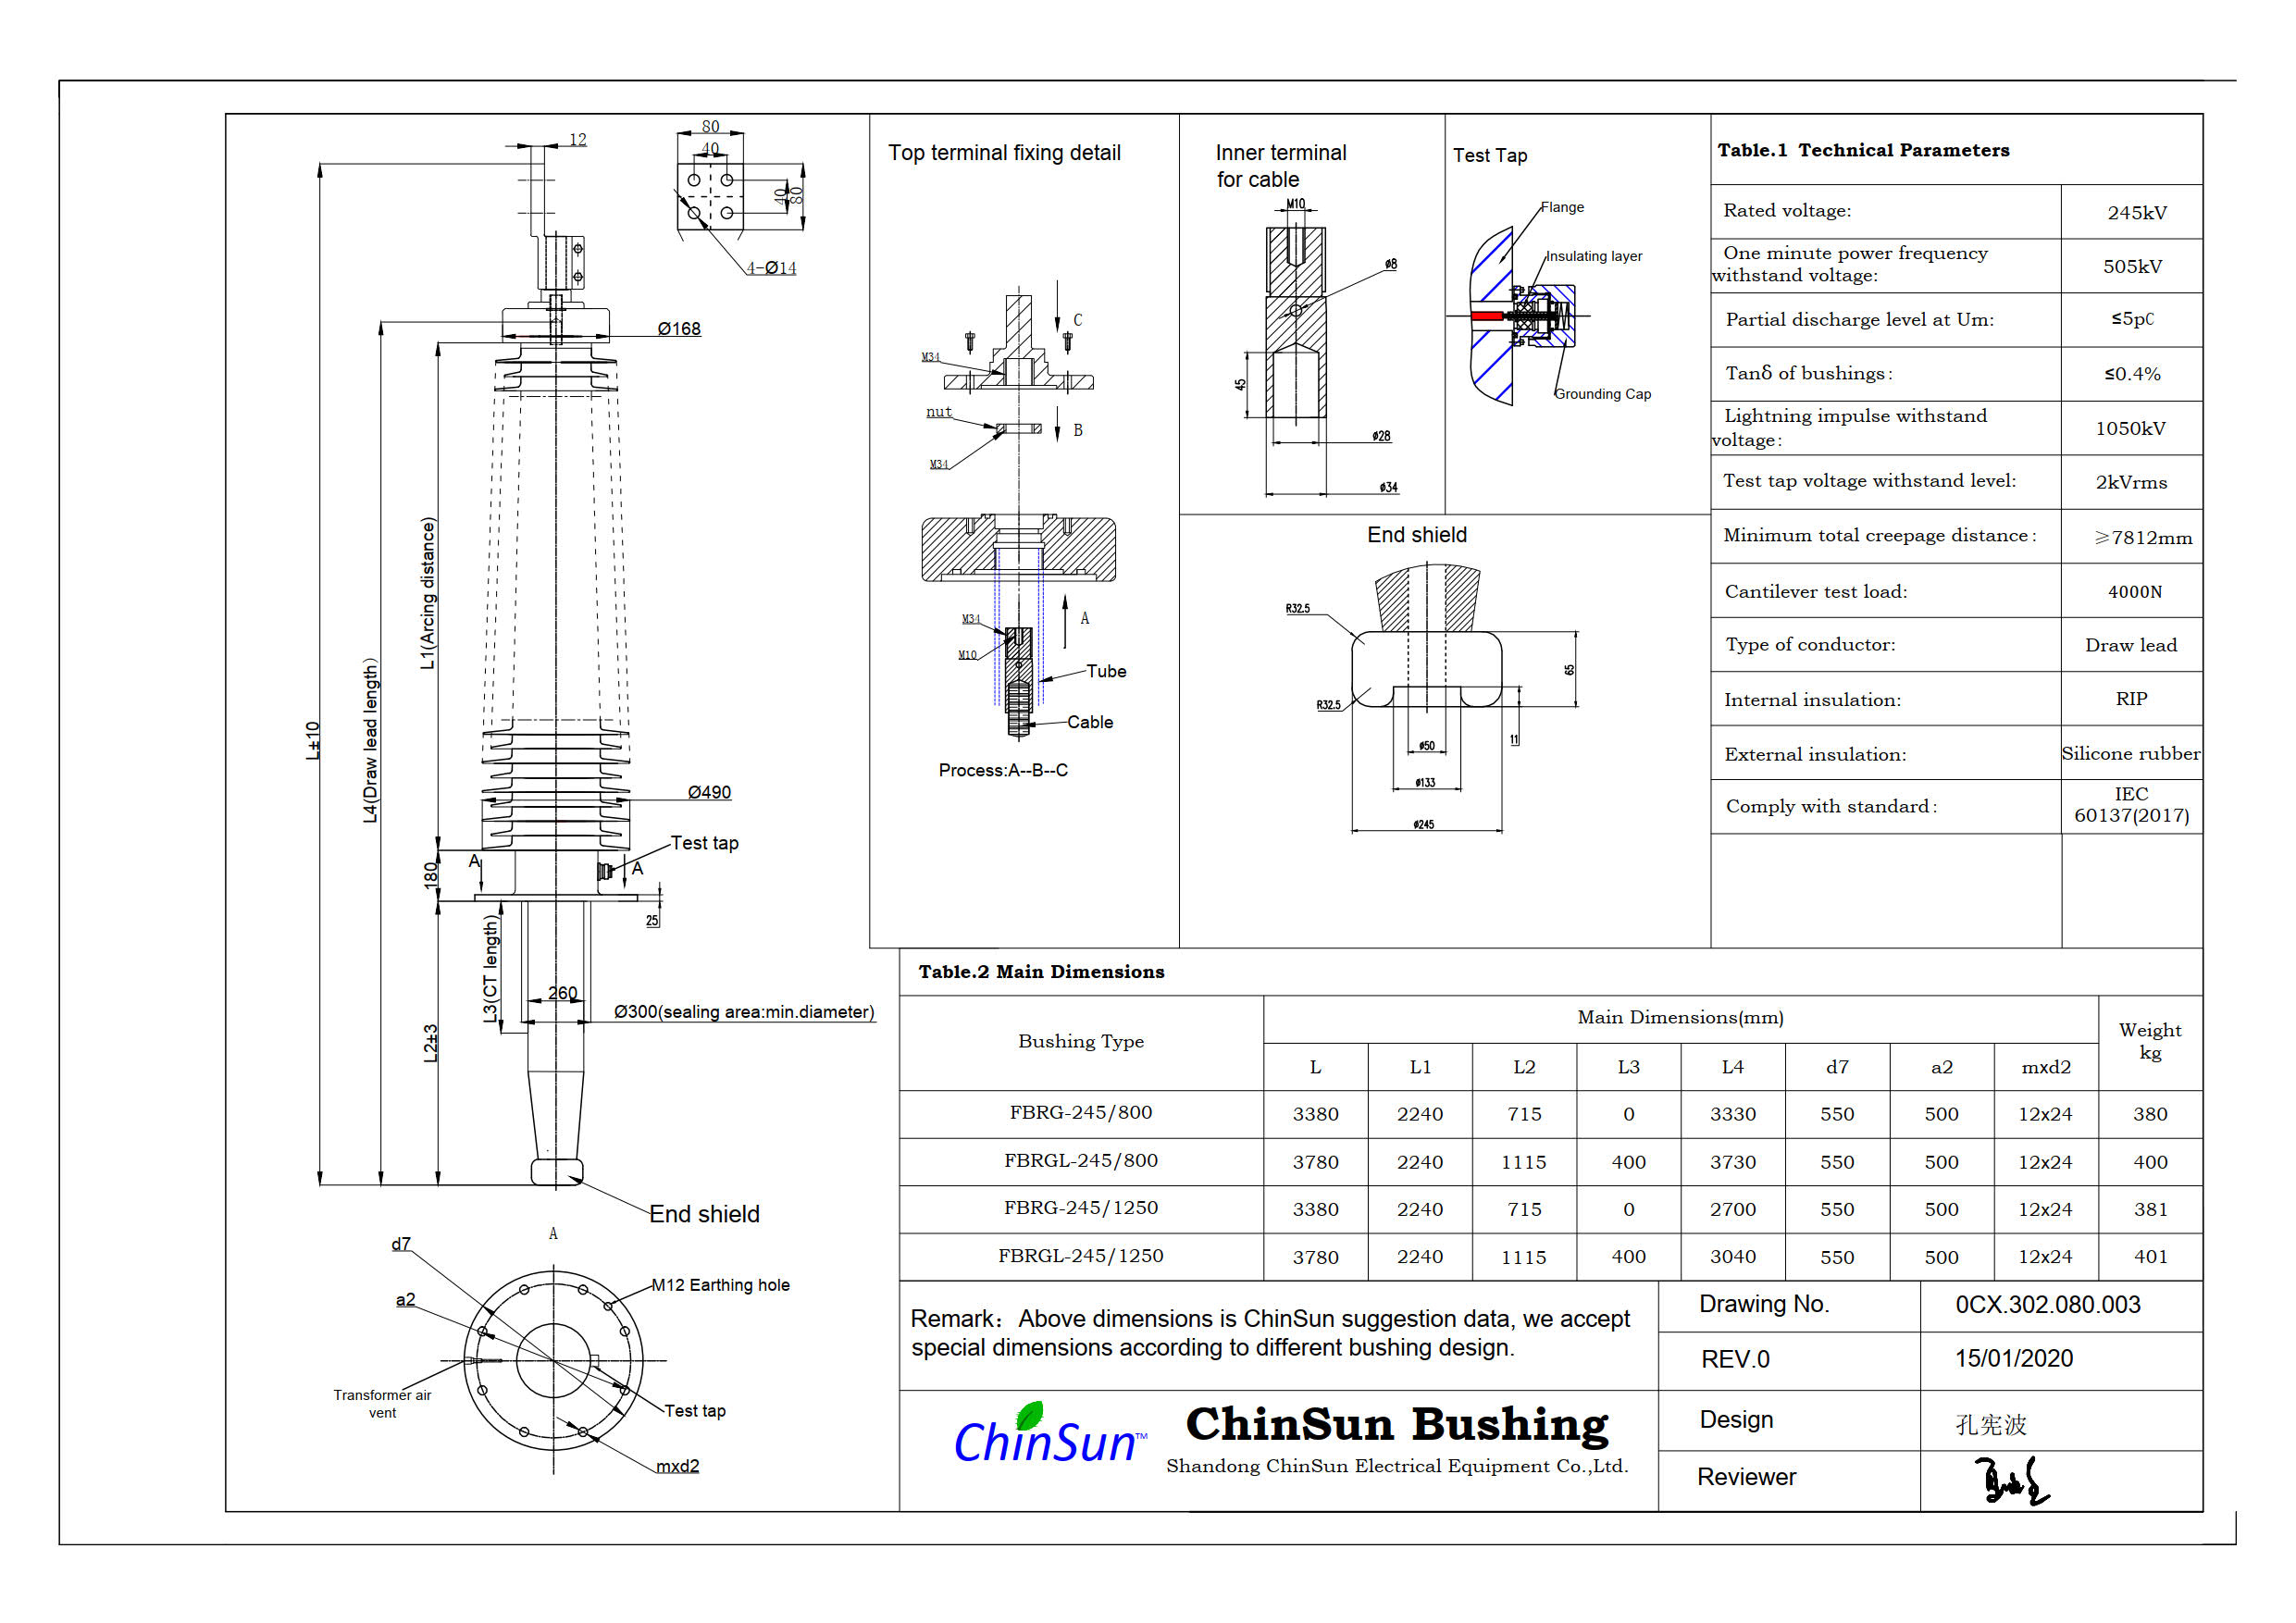 Drawing-transformer bushing-245kV_silicone rubber-DL-ChinSun